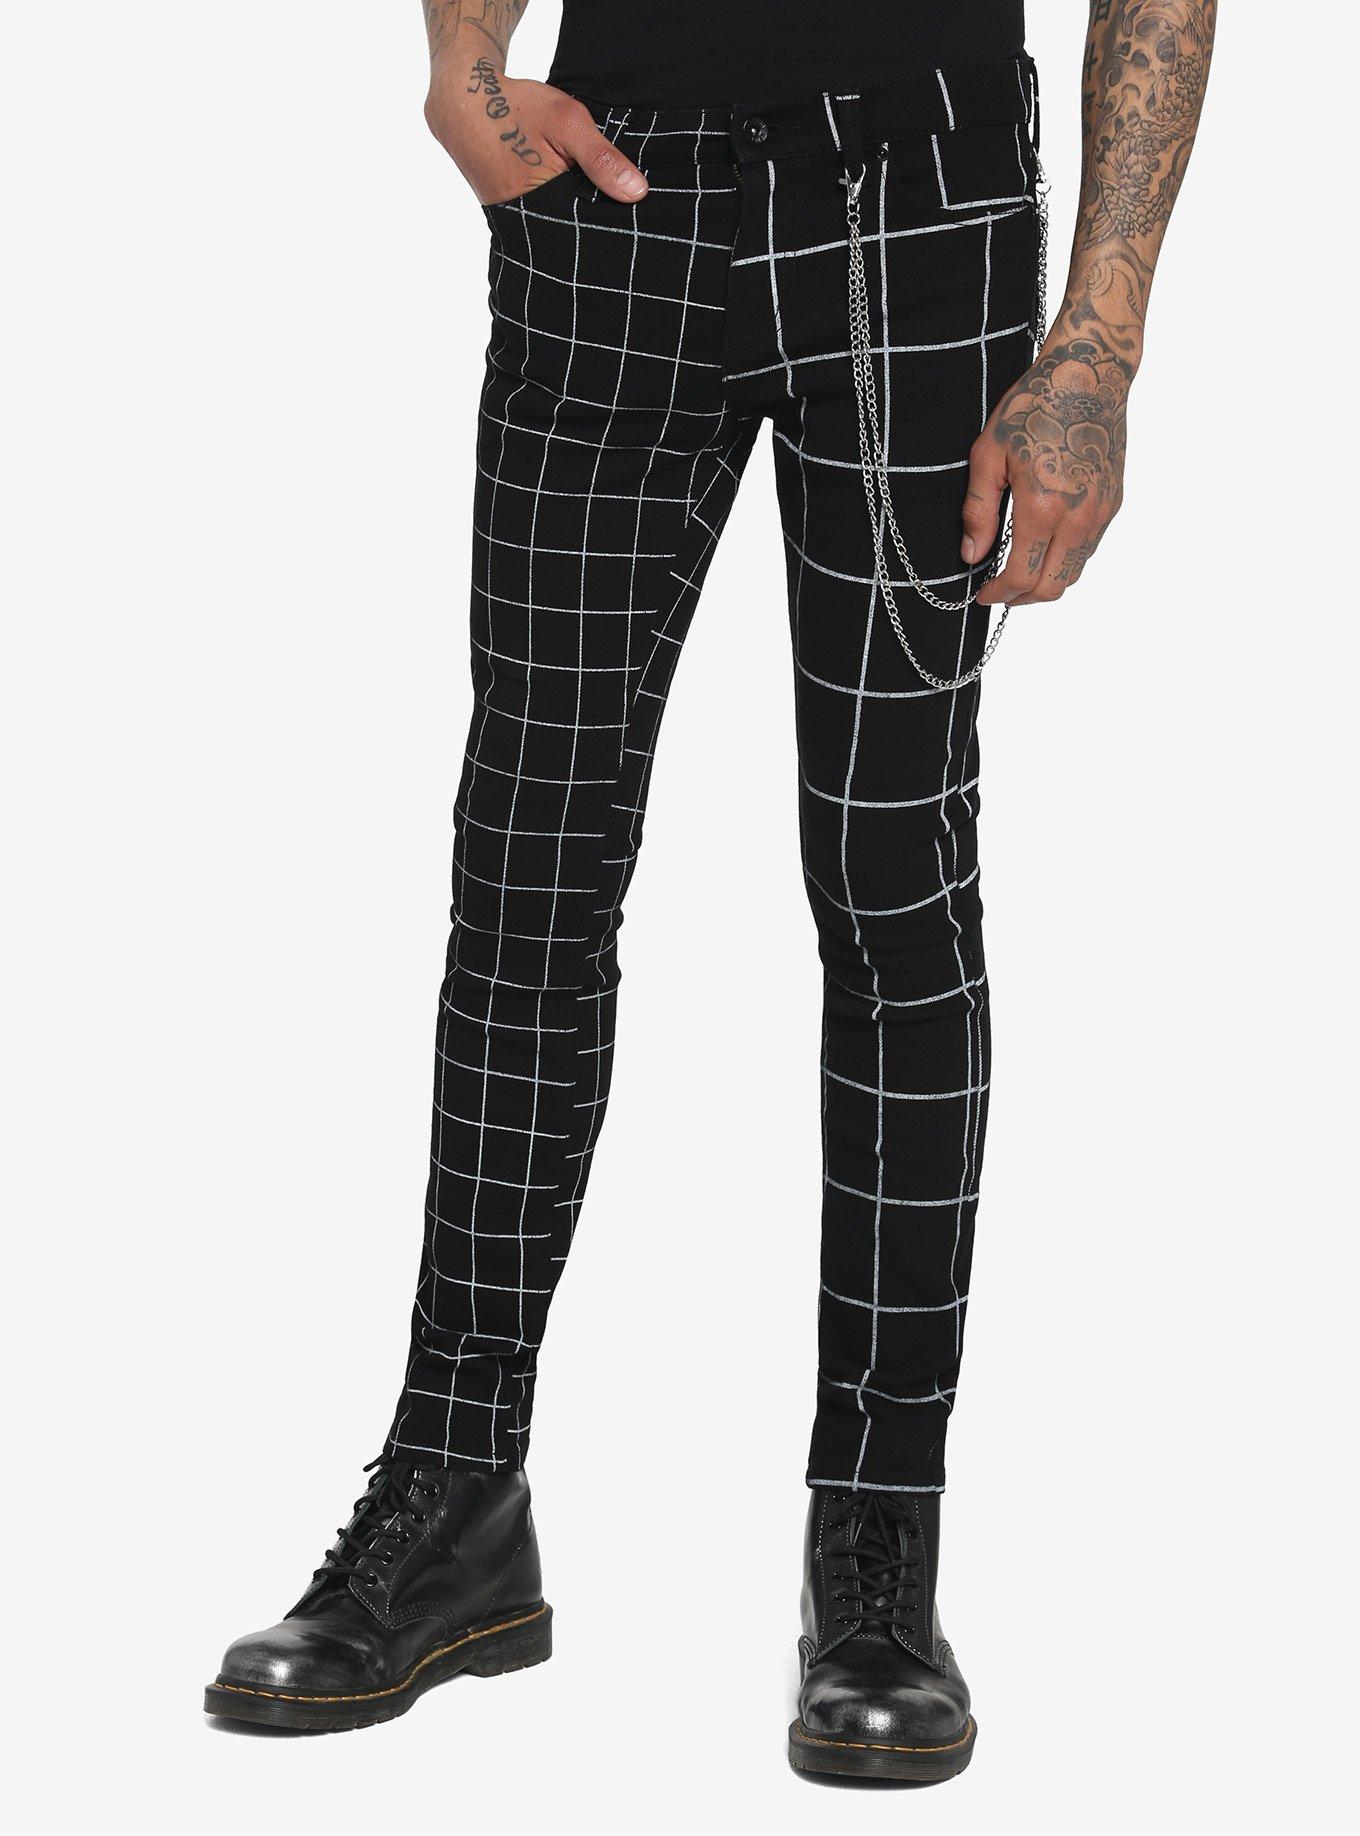 Black & White Double Grid Stinger Jeans | Hot Topic